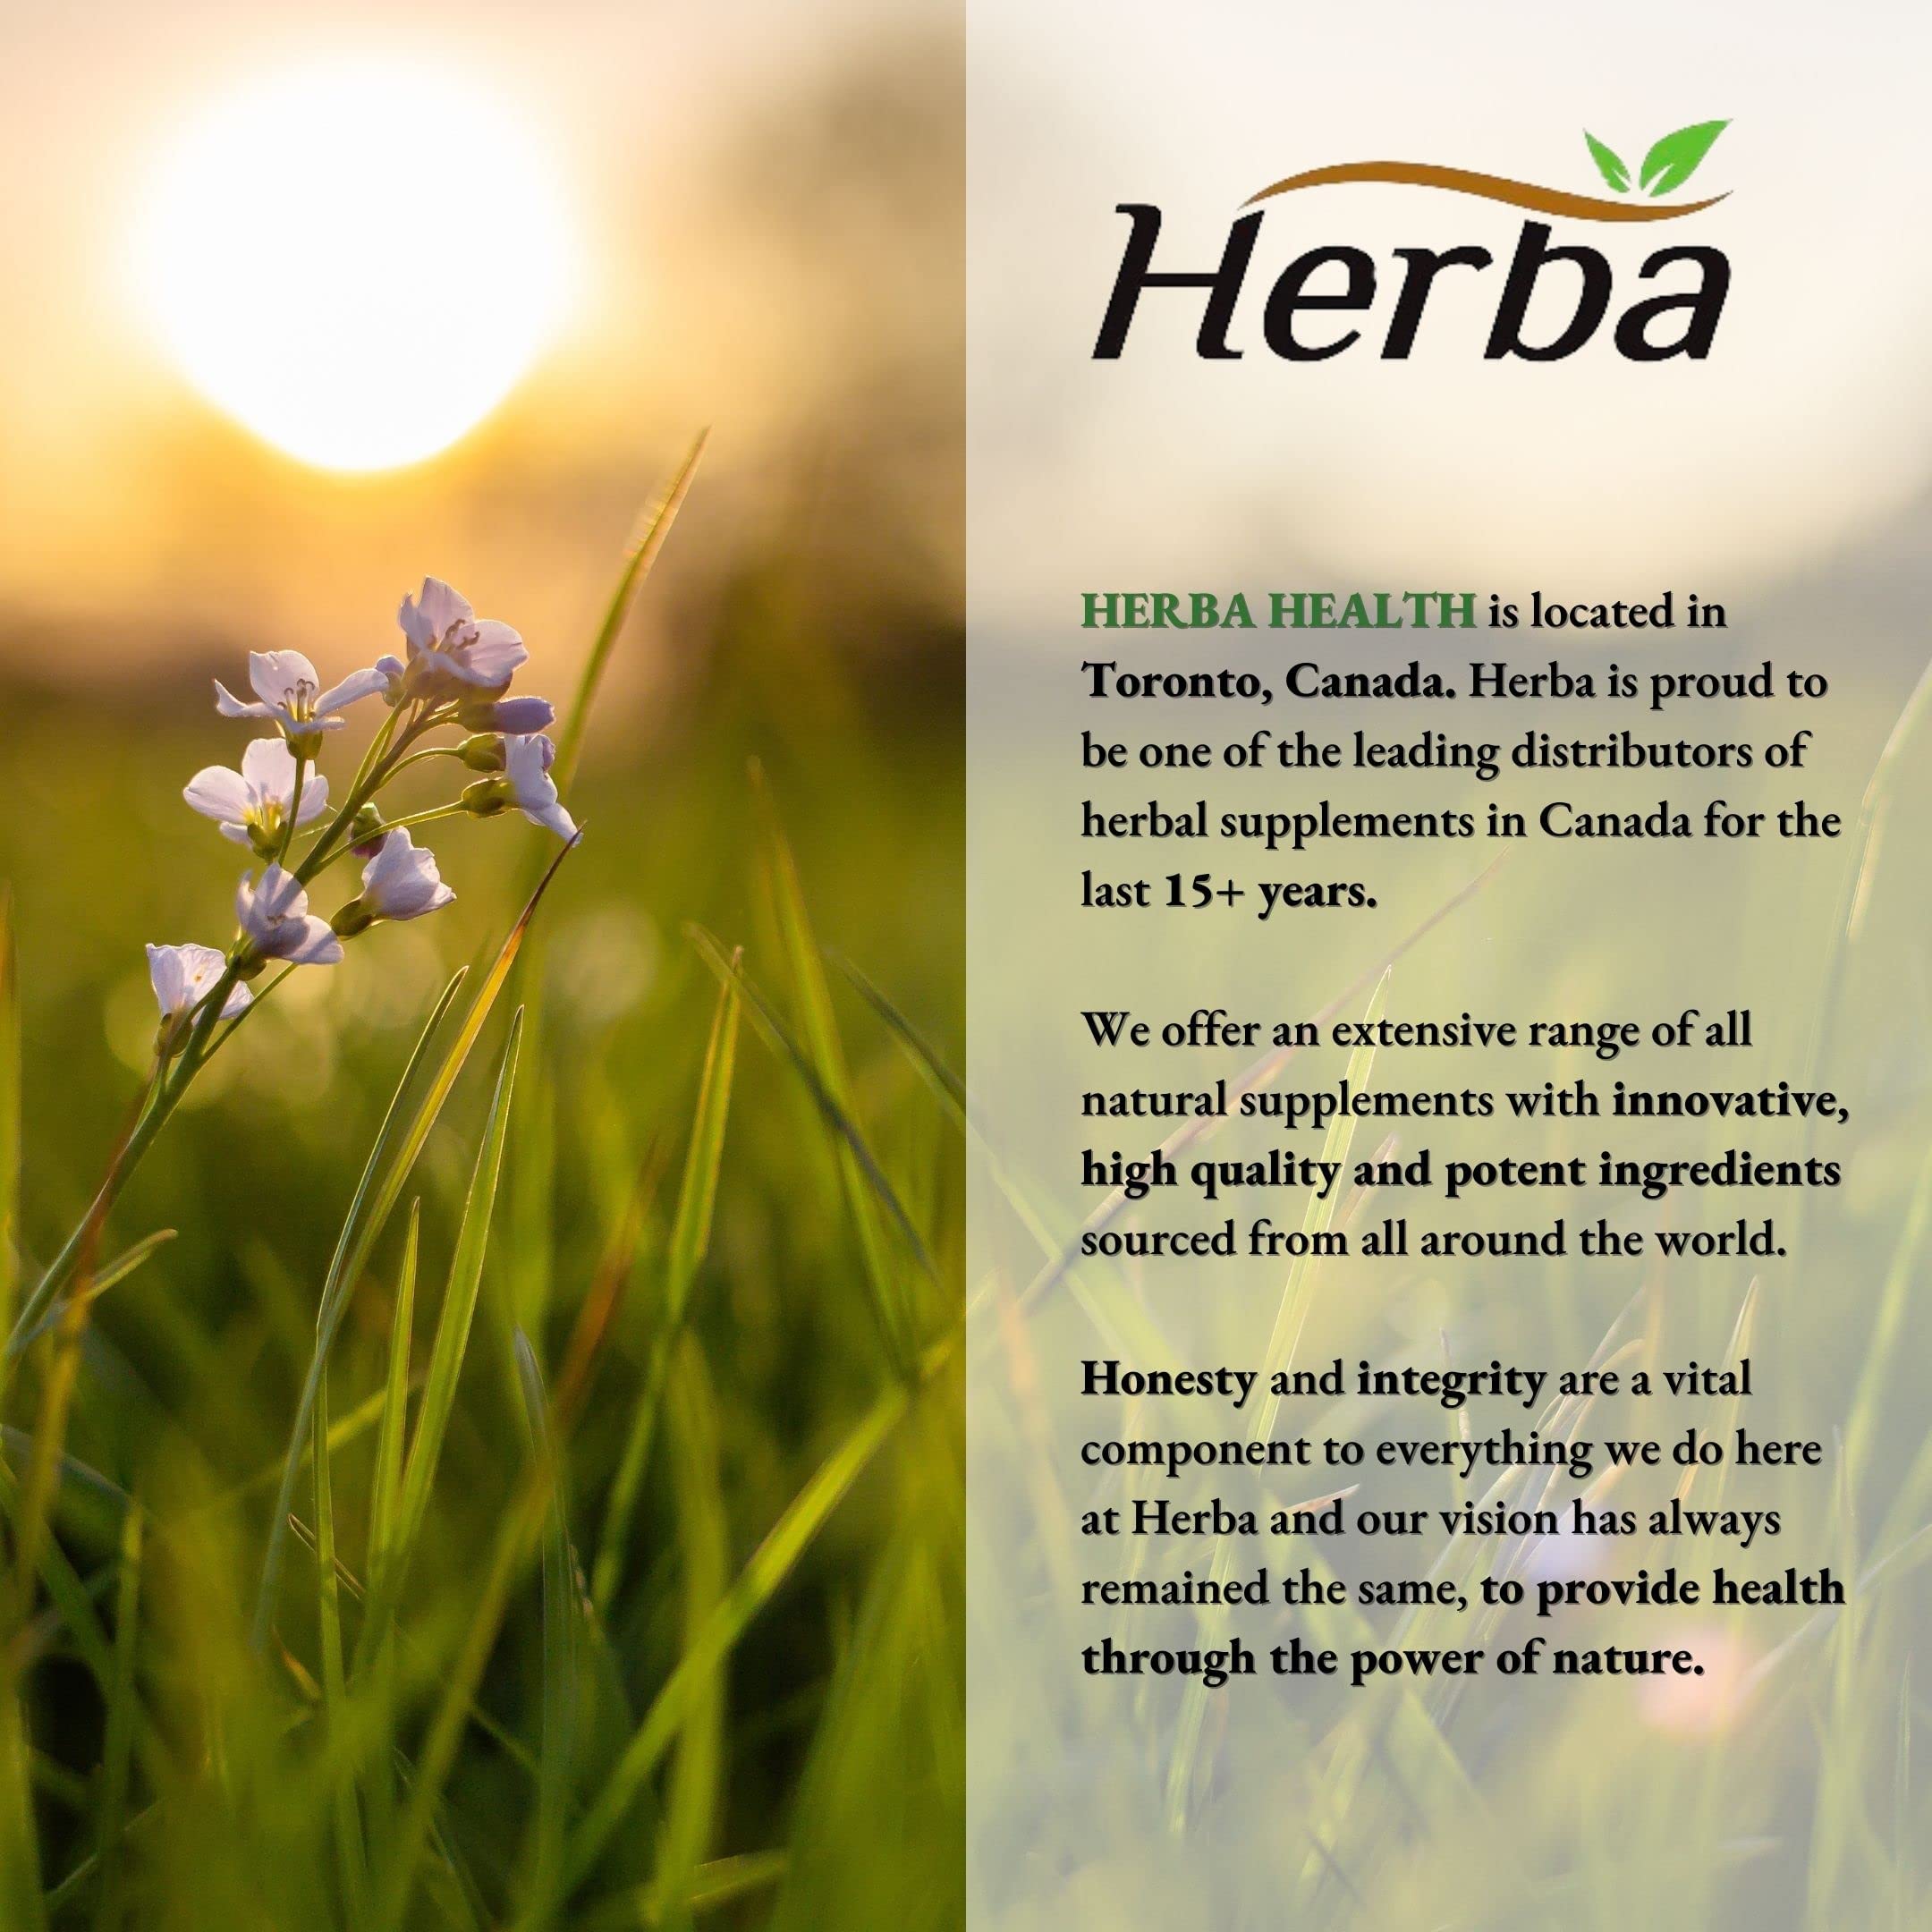 Herba Hyaluronic Acid Supplement 200mg - 100 Vegetable Capsules | Hyaluronic Acid Capsules with Vitamin C